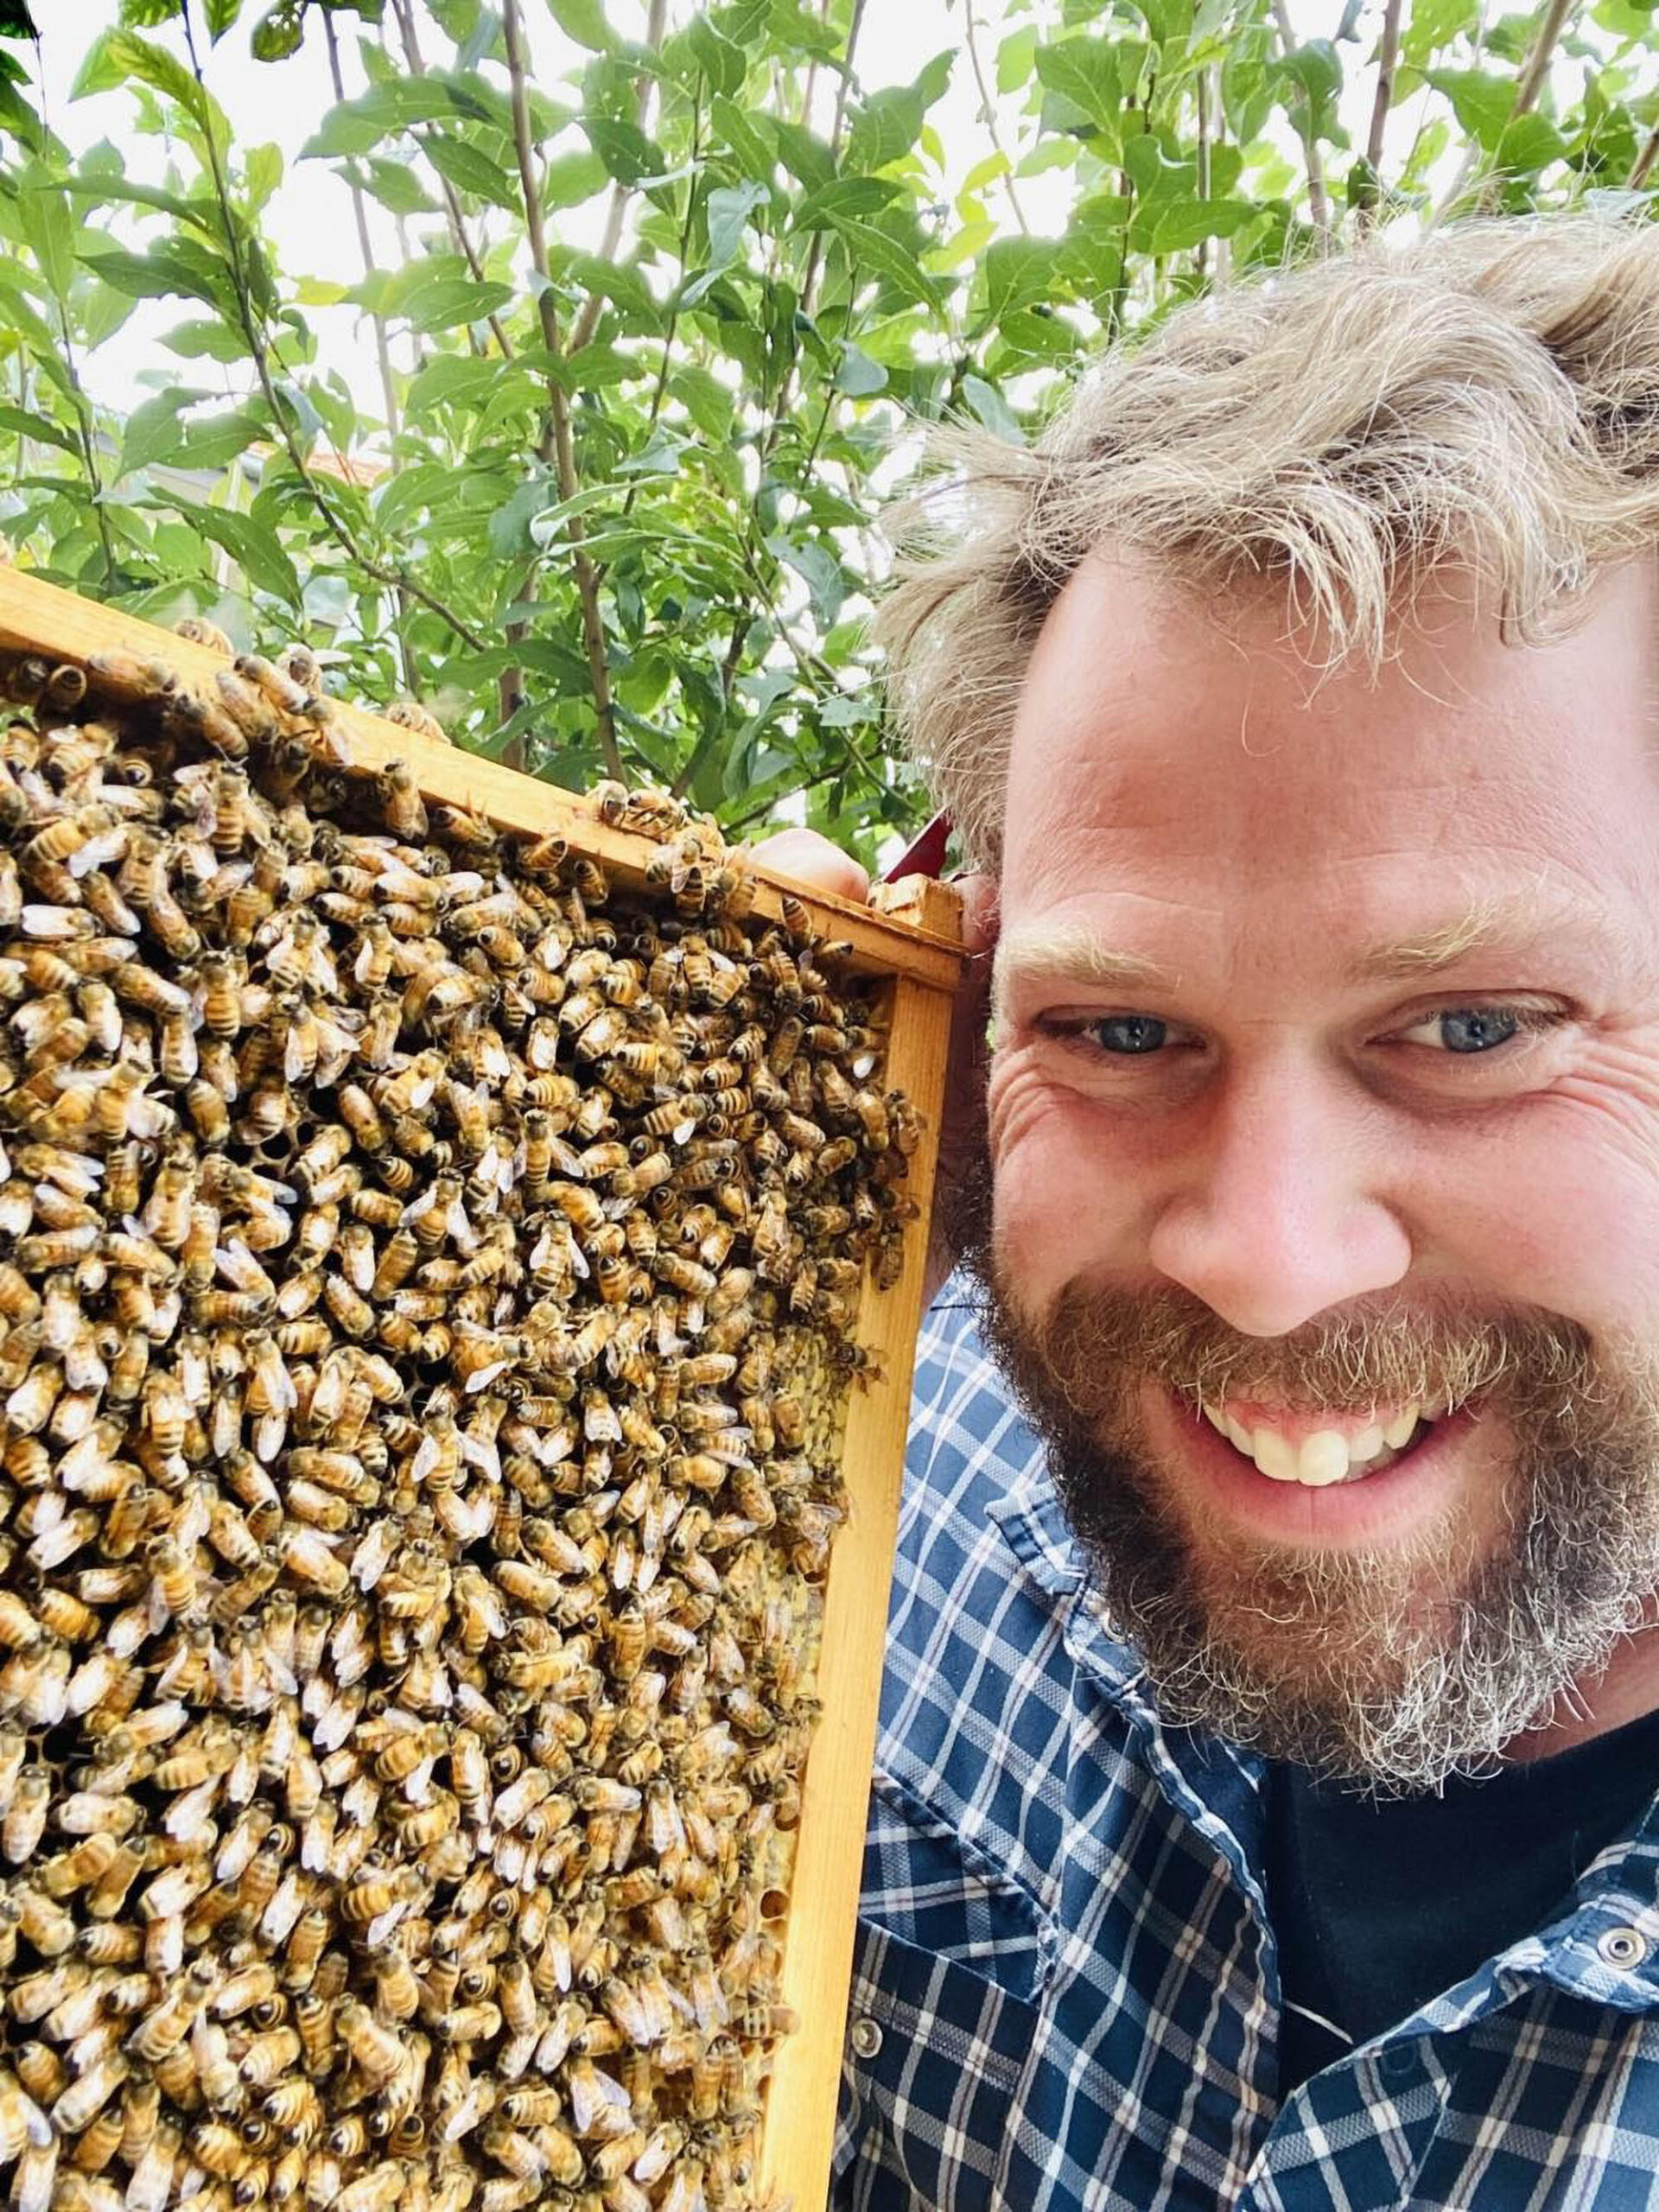 Blackburn South Beekeeper Overwhelmed By ‘Record-Breaking’ Year